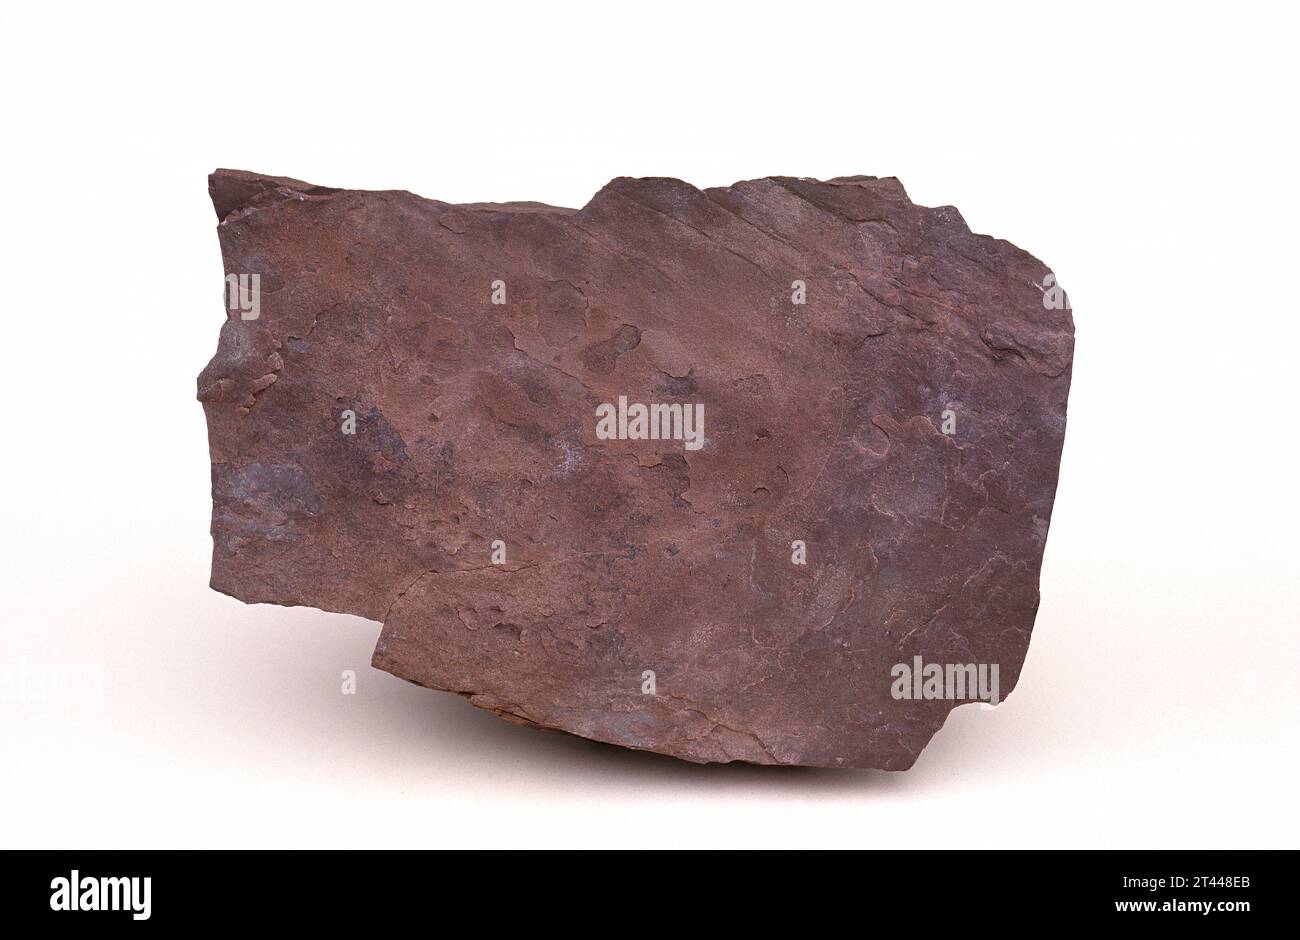 Lutite or pelite is a fine-grained sedimentary rock. Sample. Stock Photo